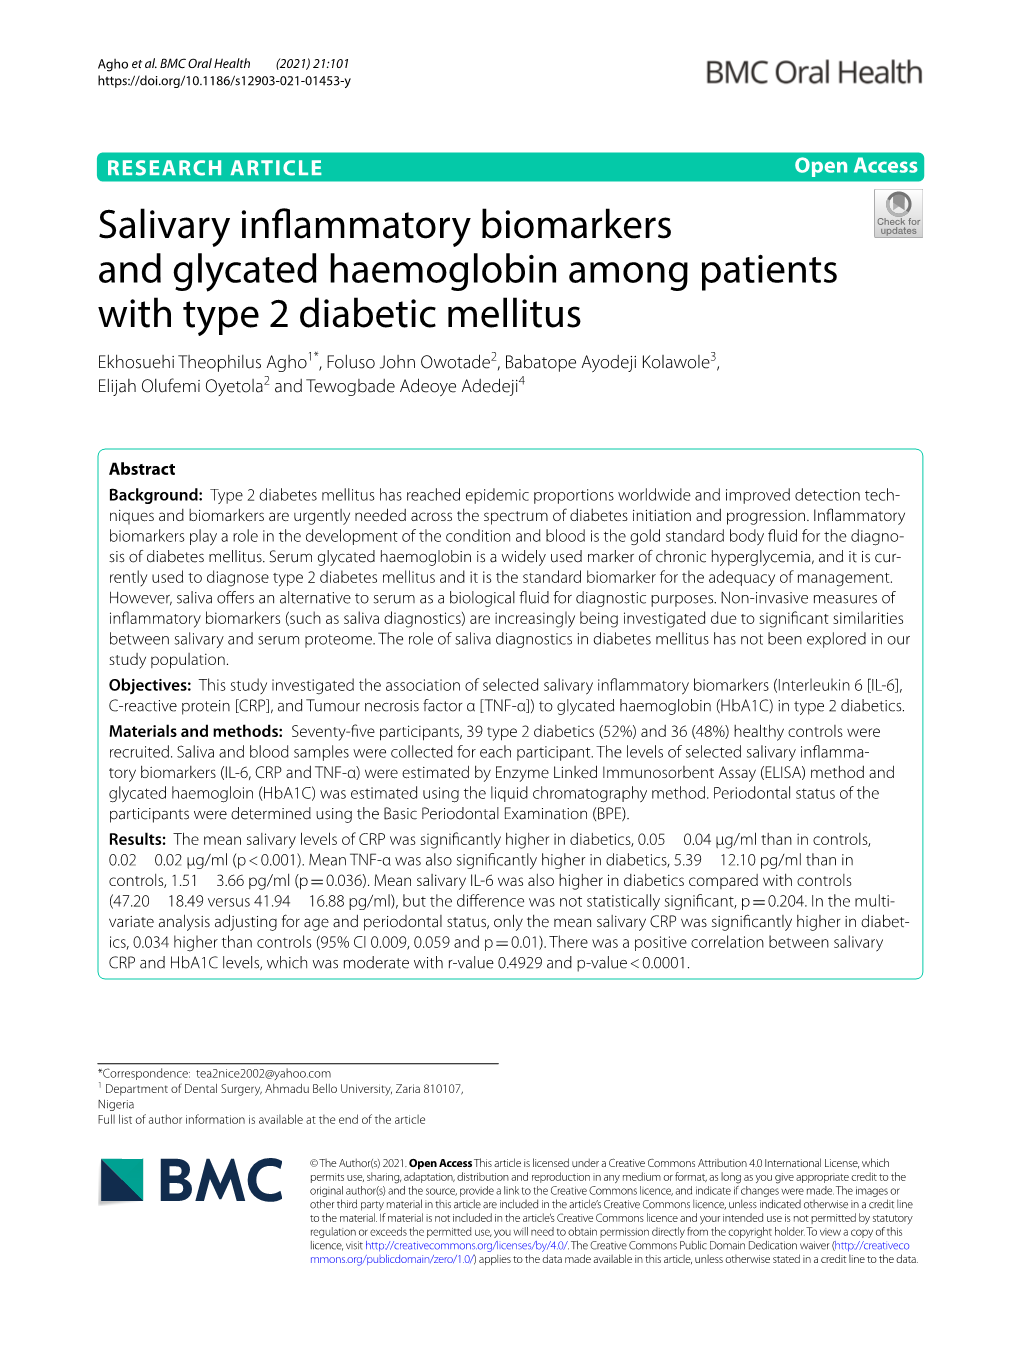 Salivary Inflammatory Biomarkers and Glycated Haemoglobin Among